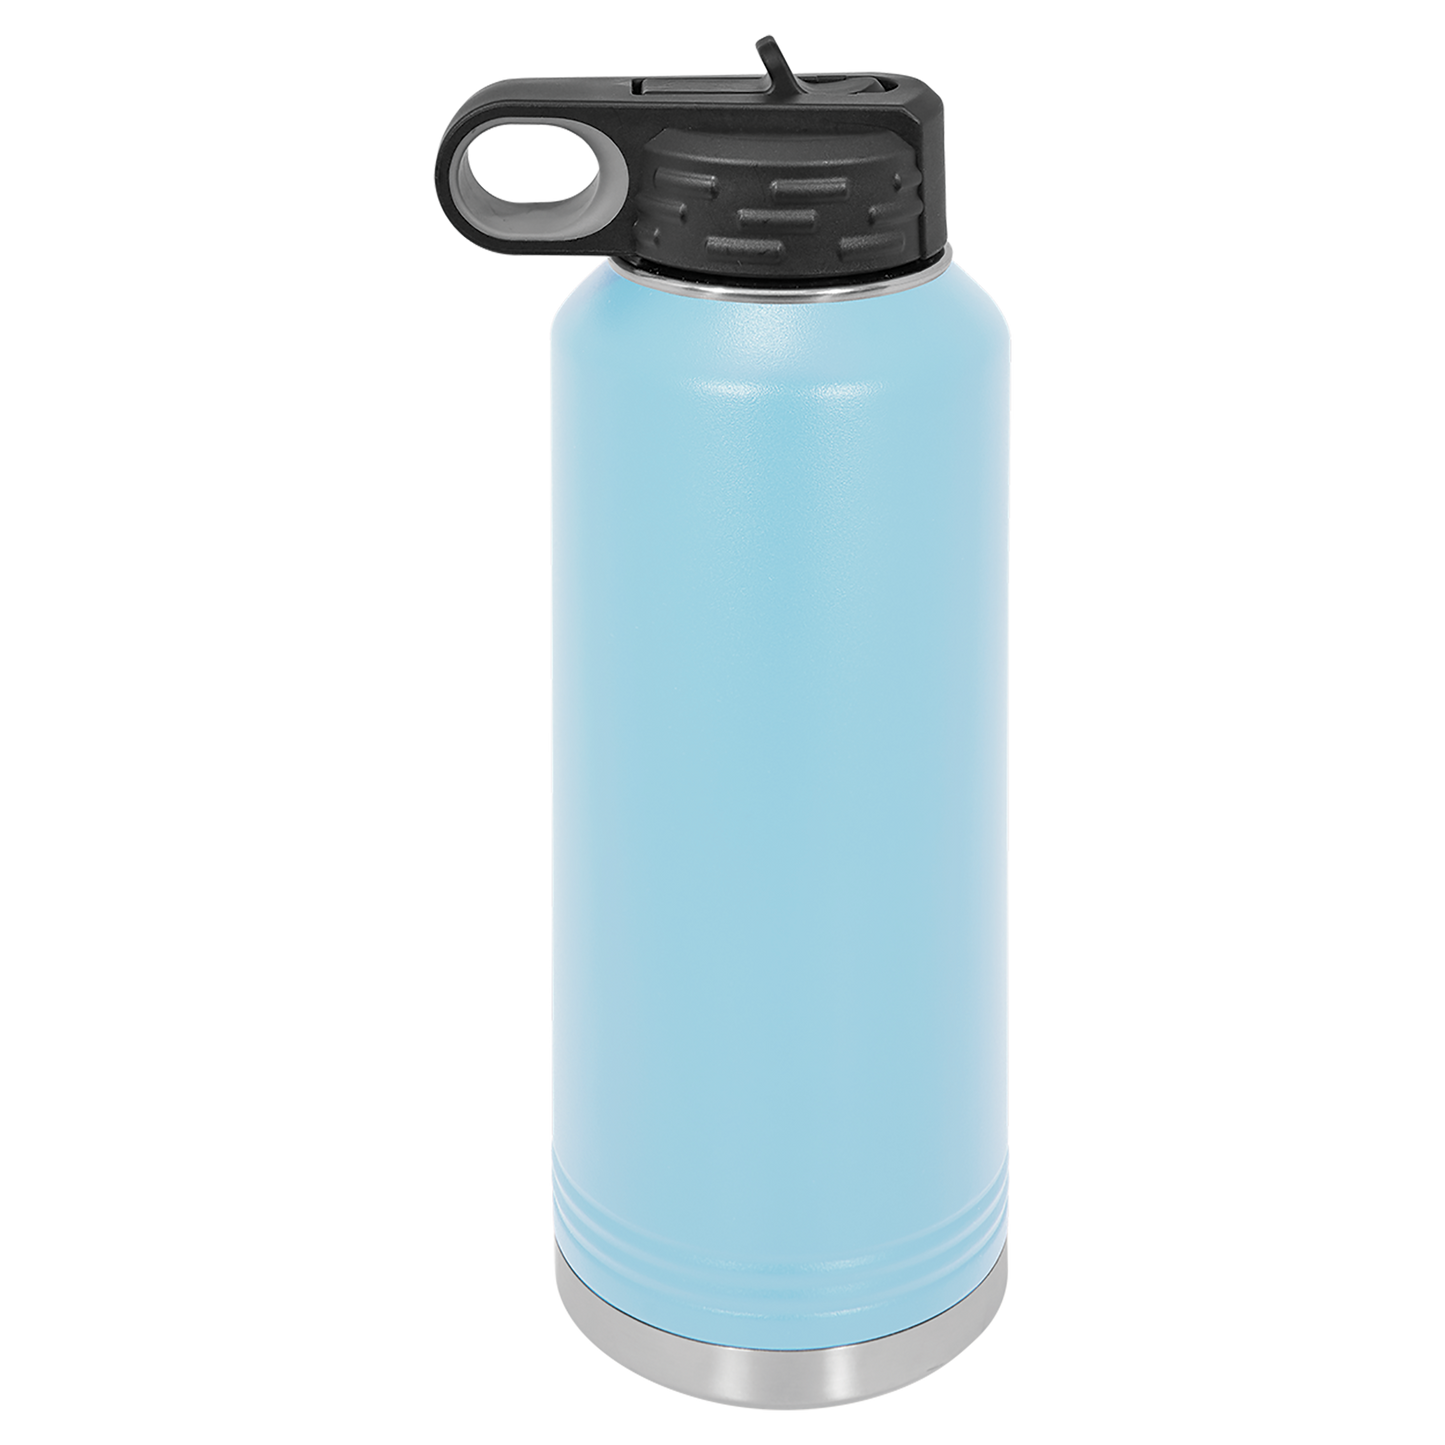 Cane Corso Water Bottle